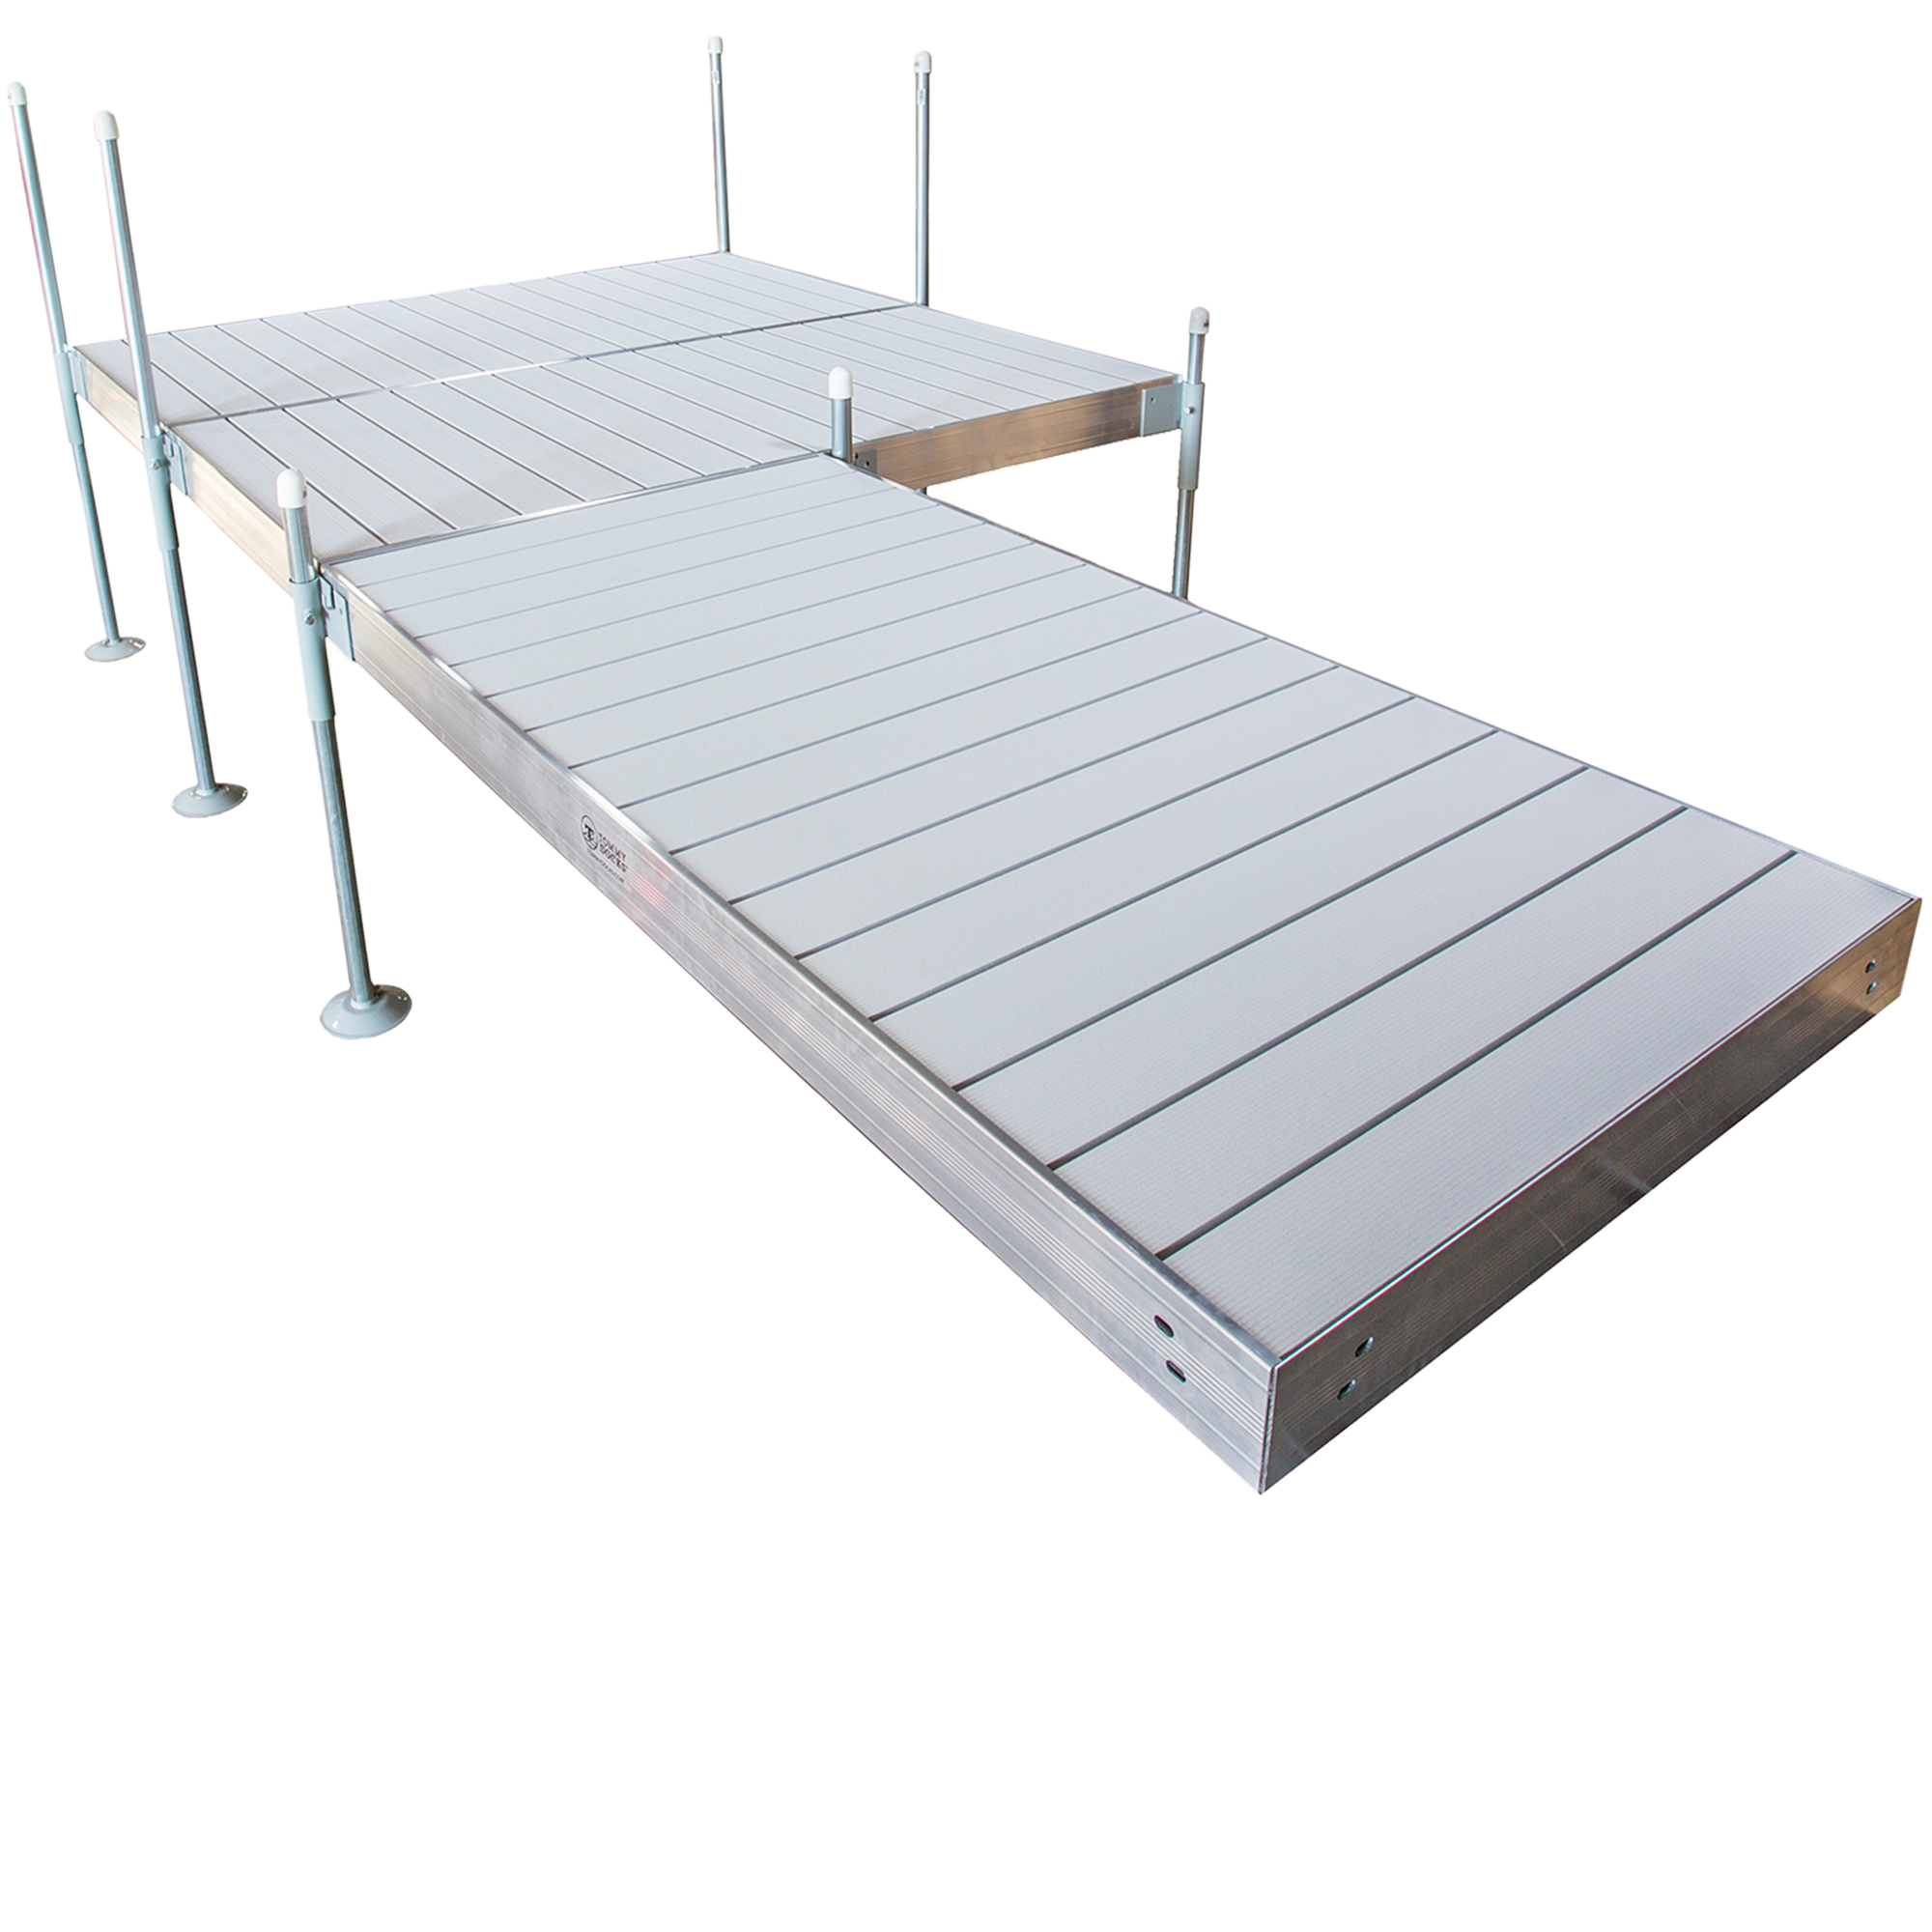 16’ Platform Boat Dock System with Aluminum Frame and Aluminum Decking